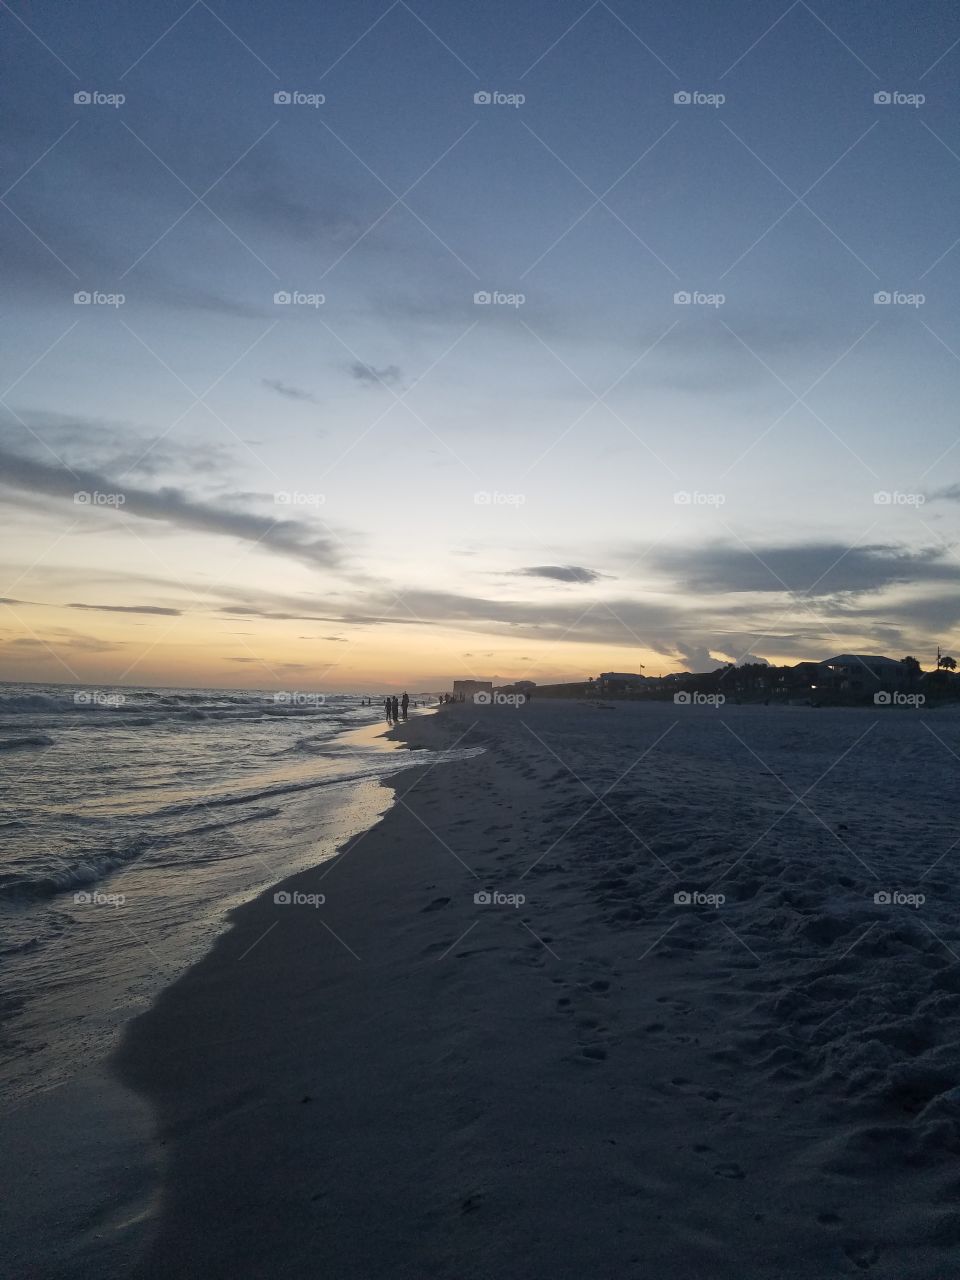 sunset at the gulf